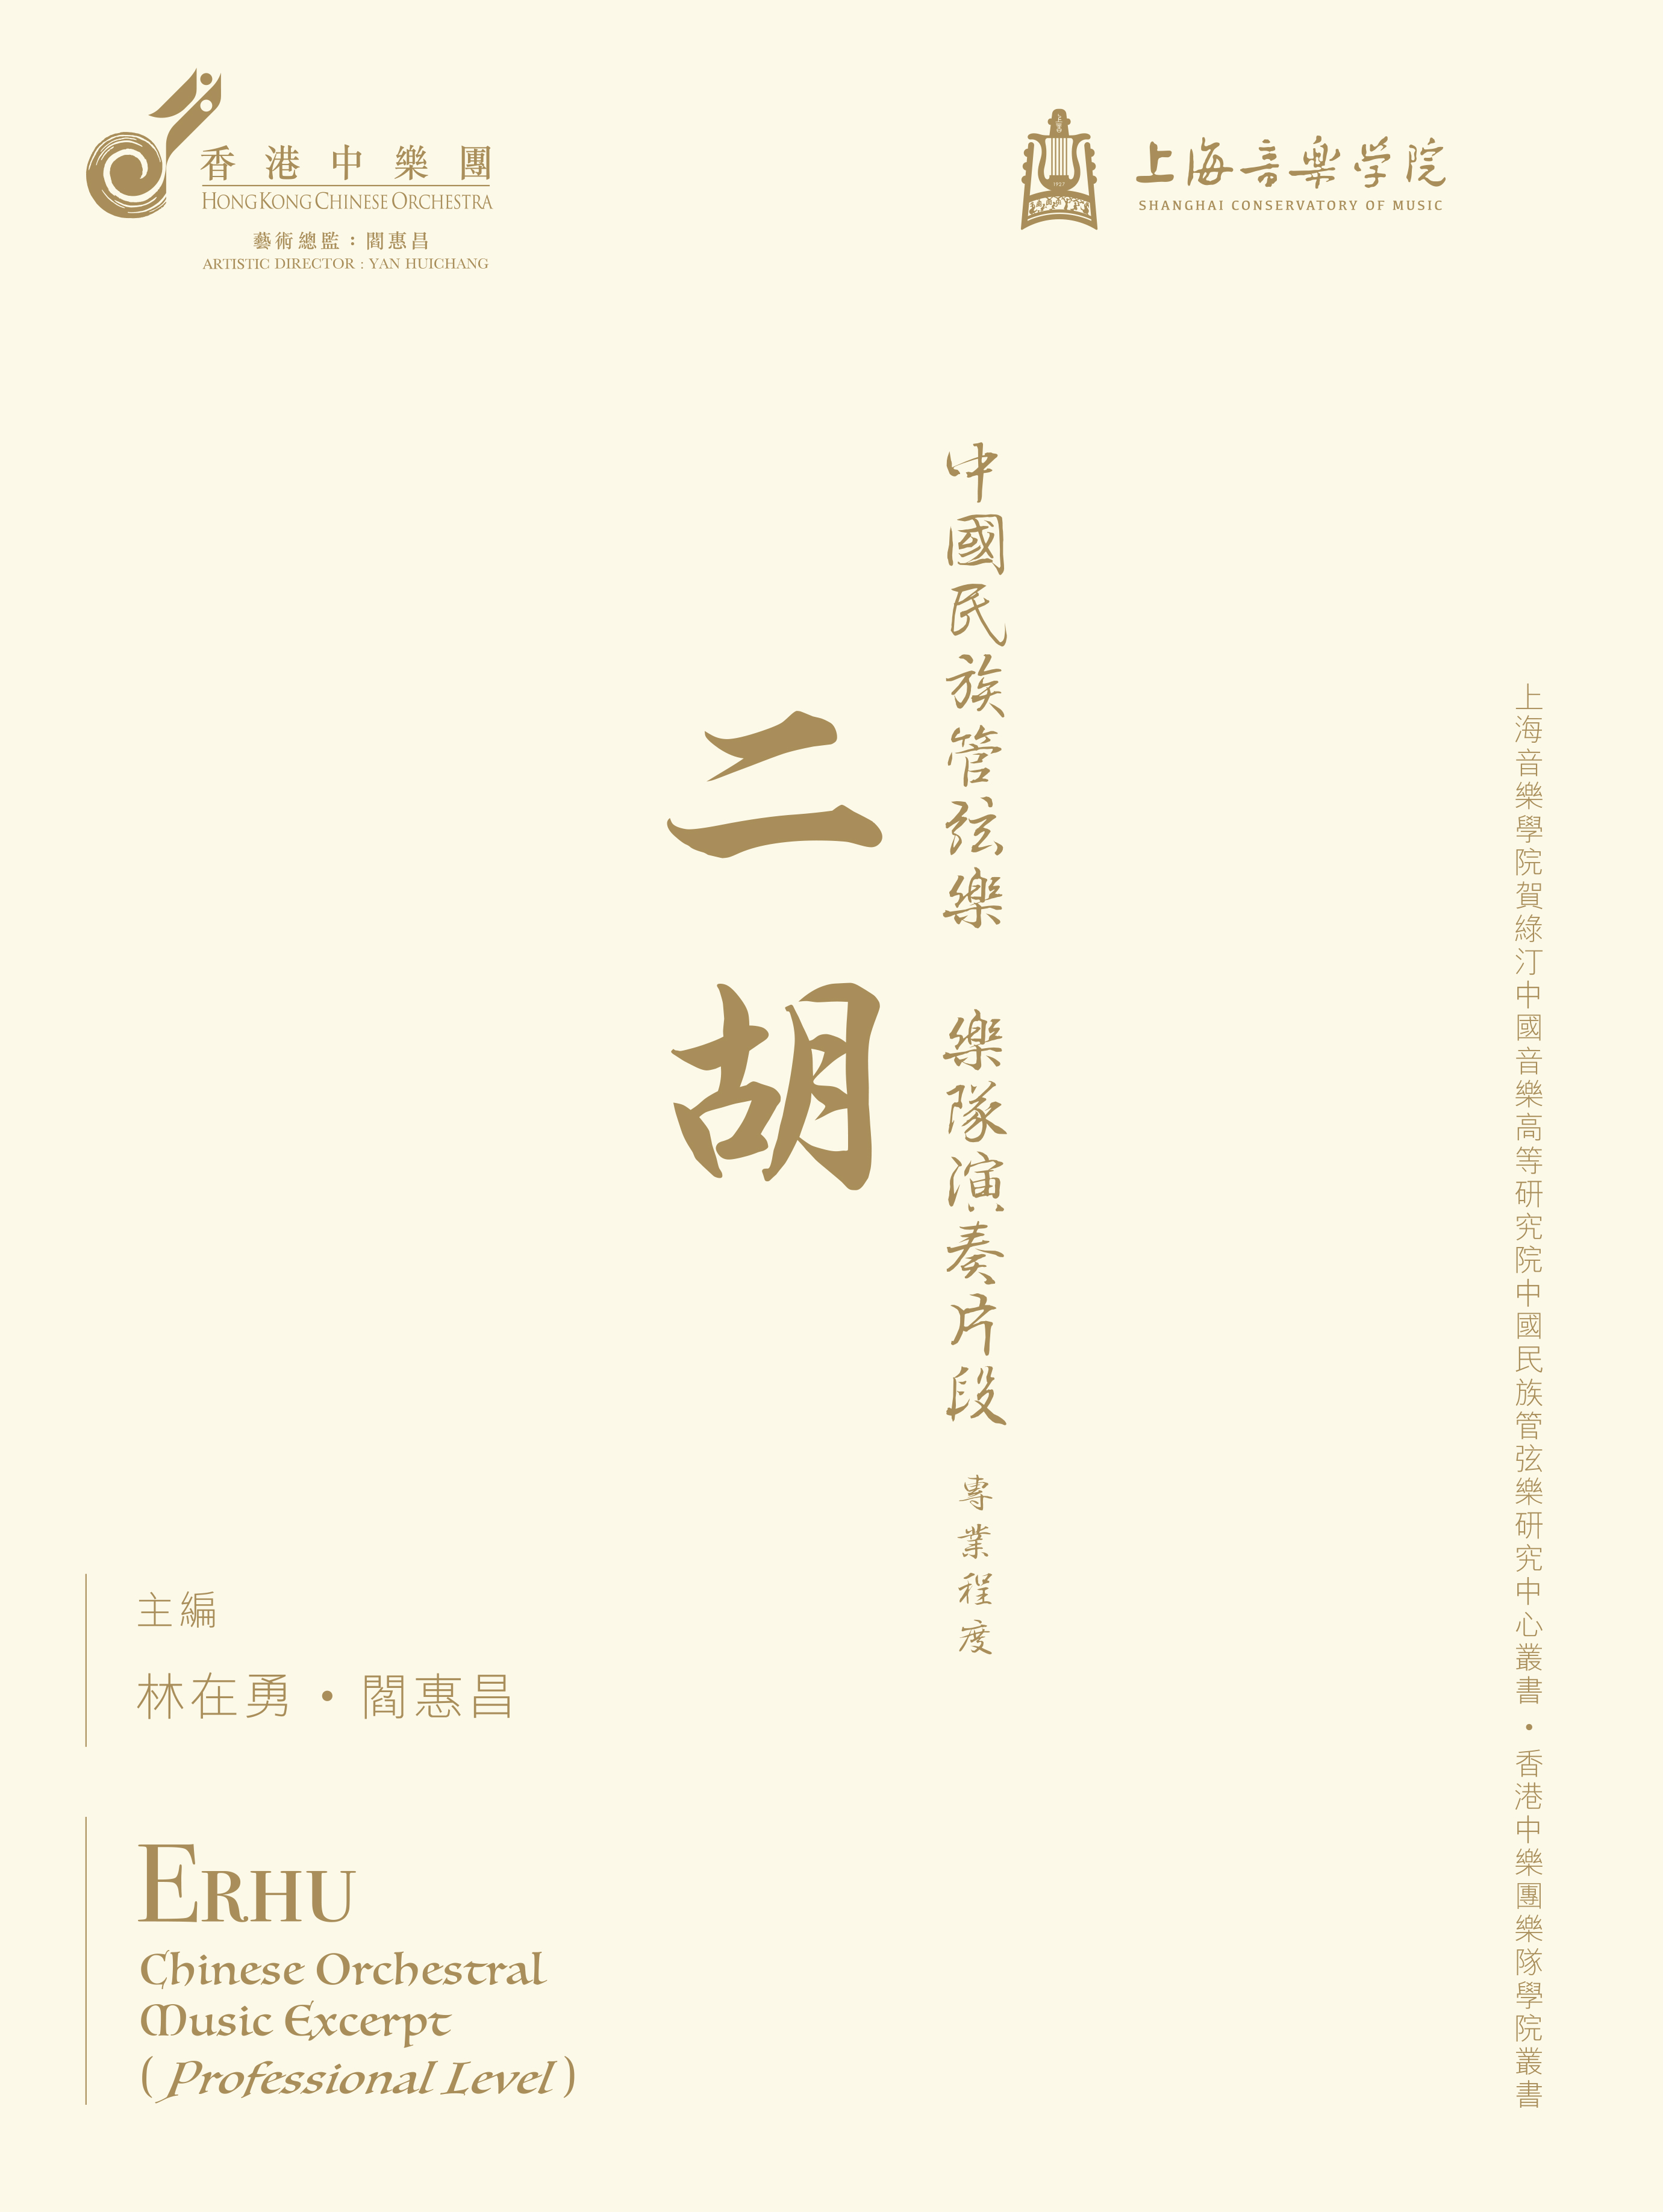 Erhu - Chinese Orchestral Music Excerpt